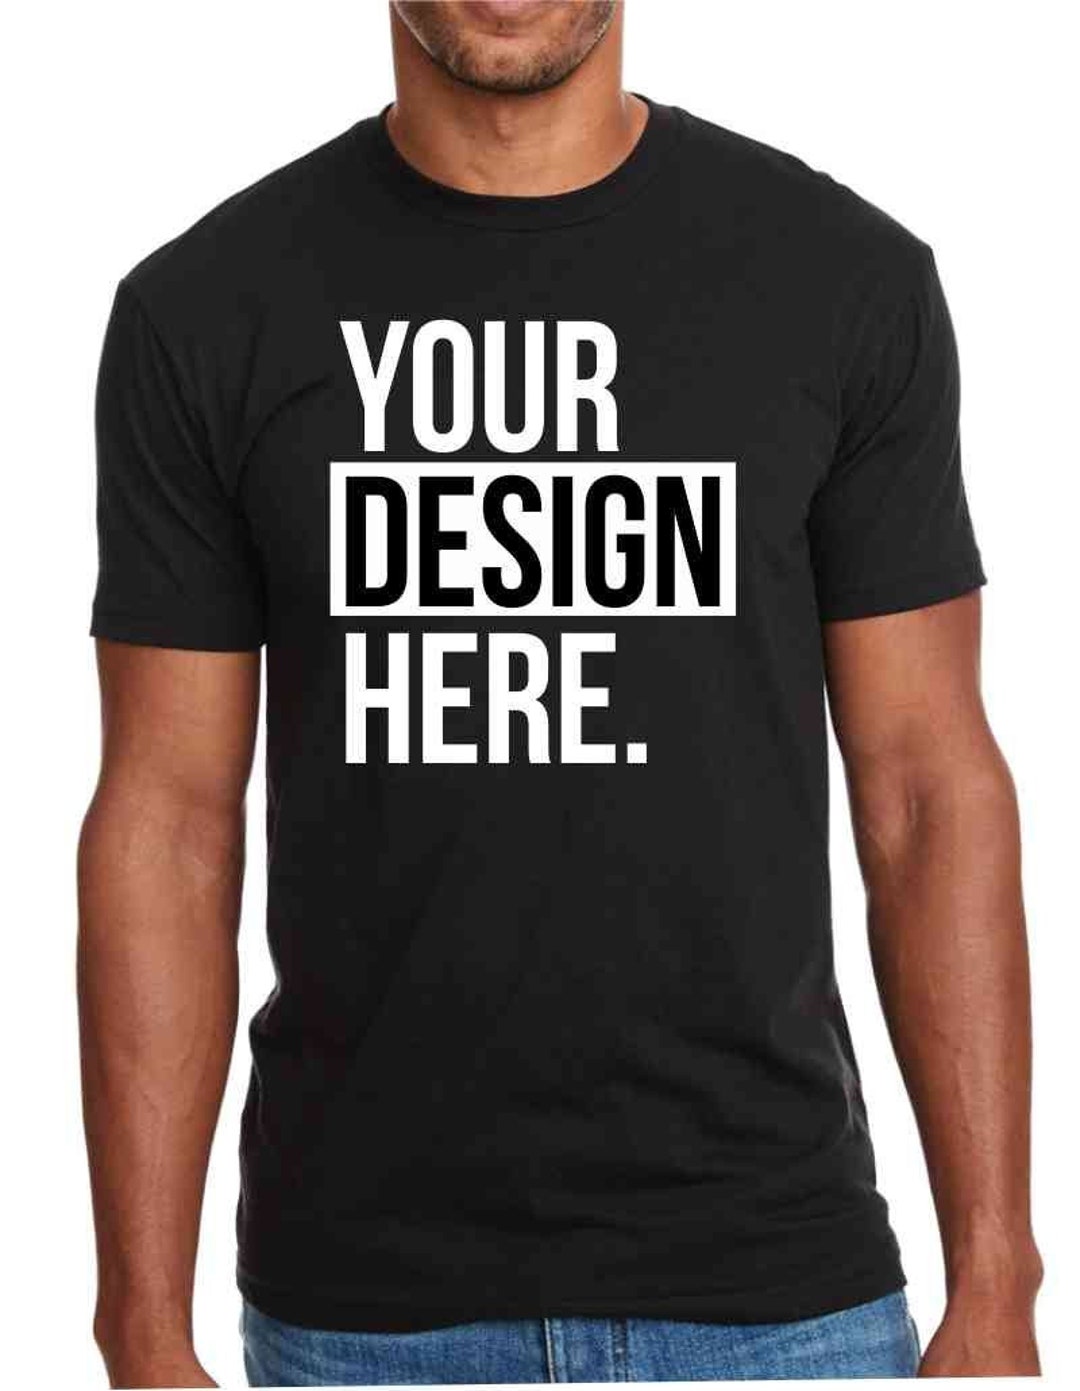 Bulk Screen Printing Wholesale T-shirts Company Names - Etsy